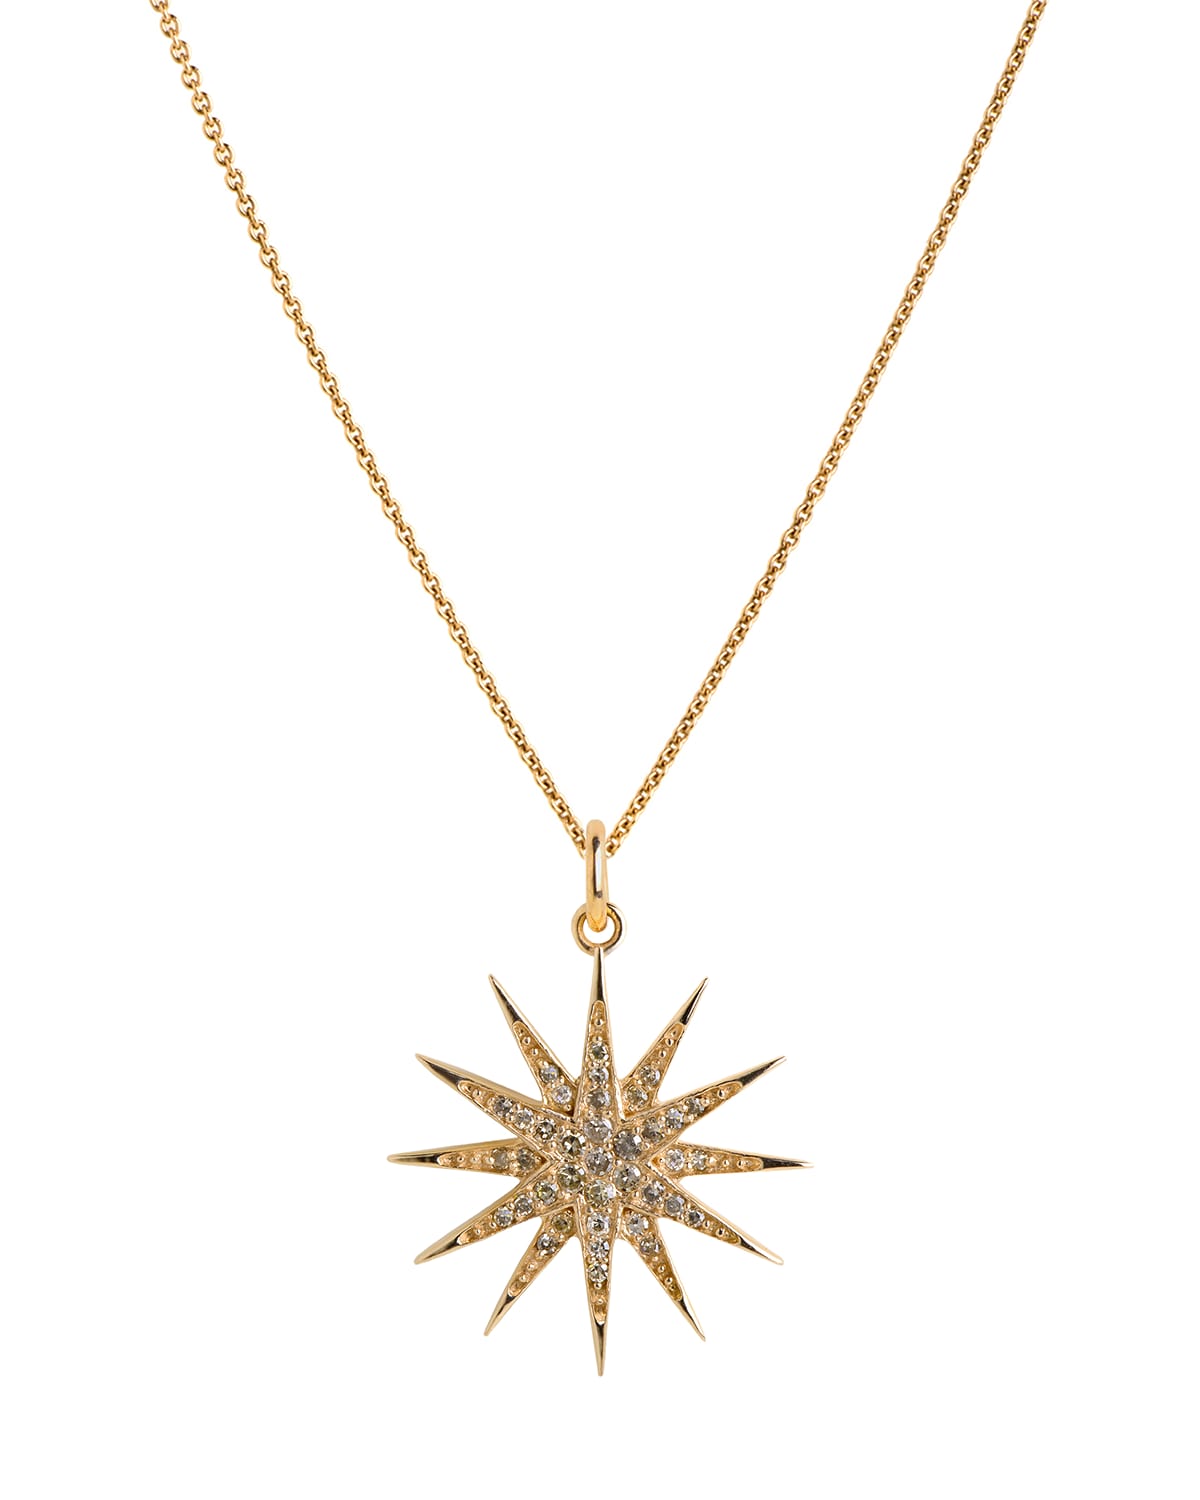 Bridget King Jewelry Starburst Diamond Necklace